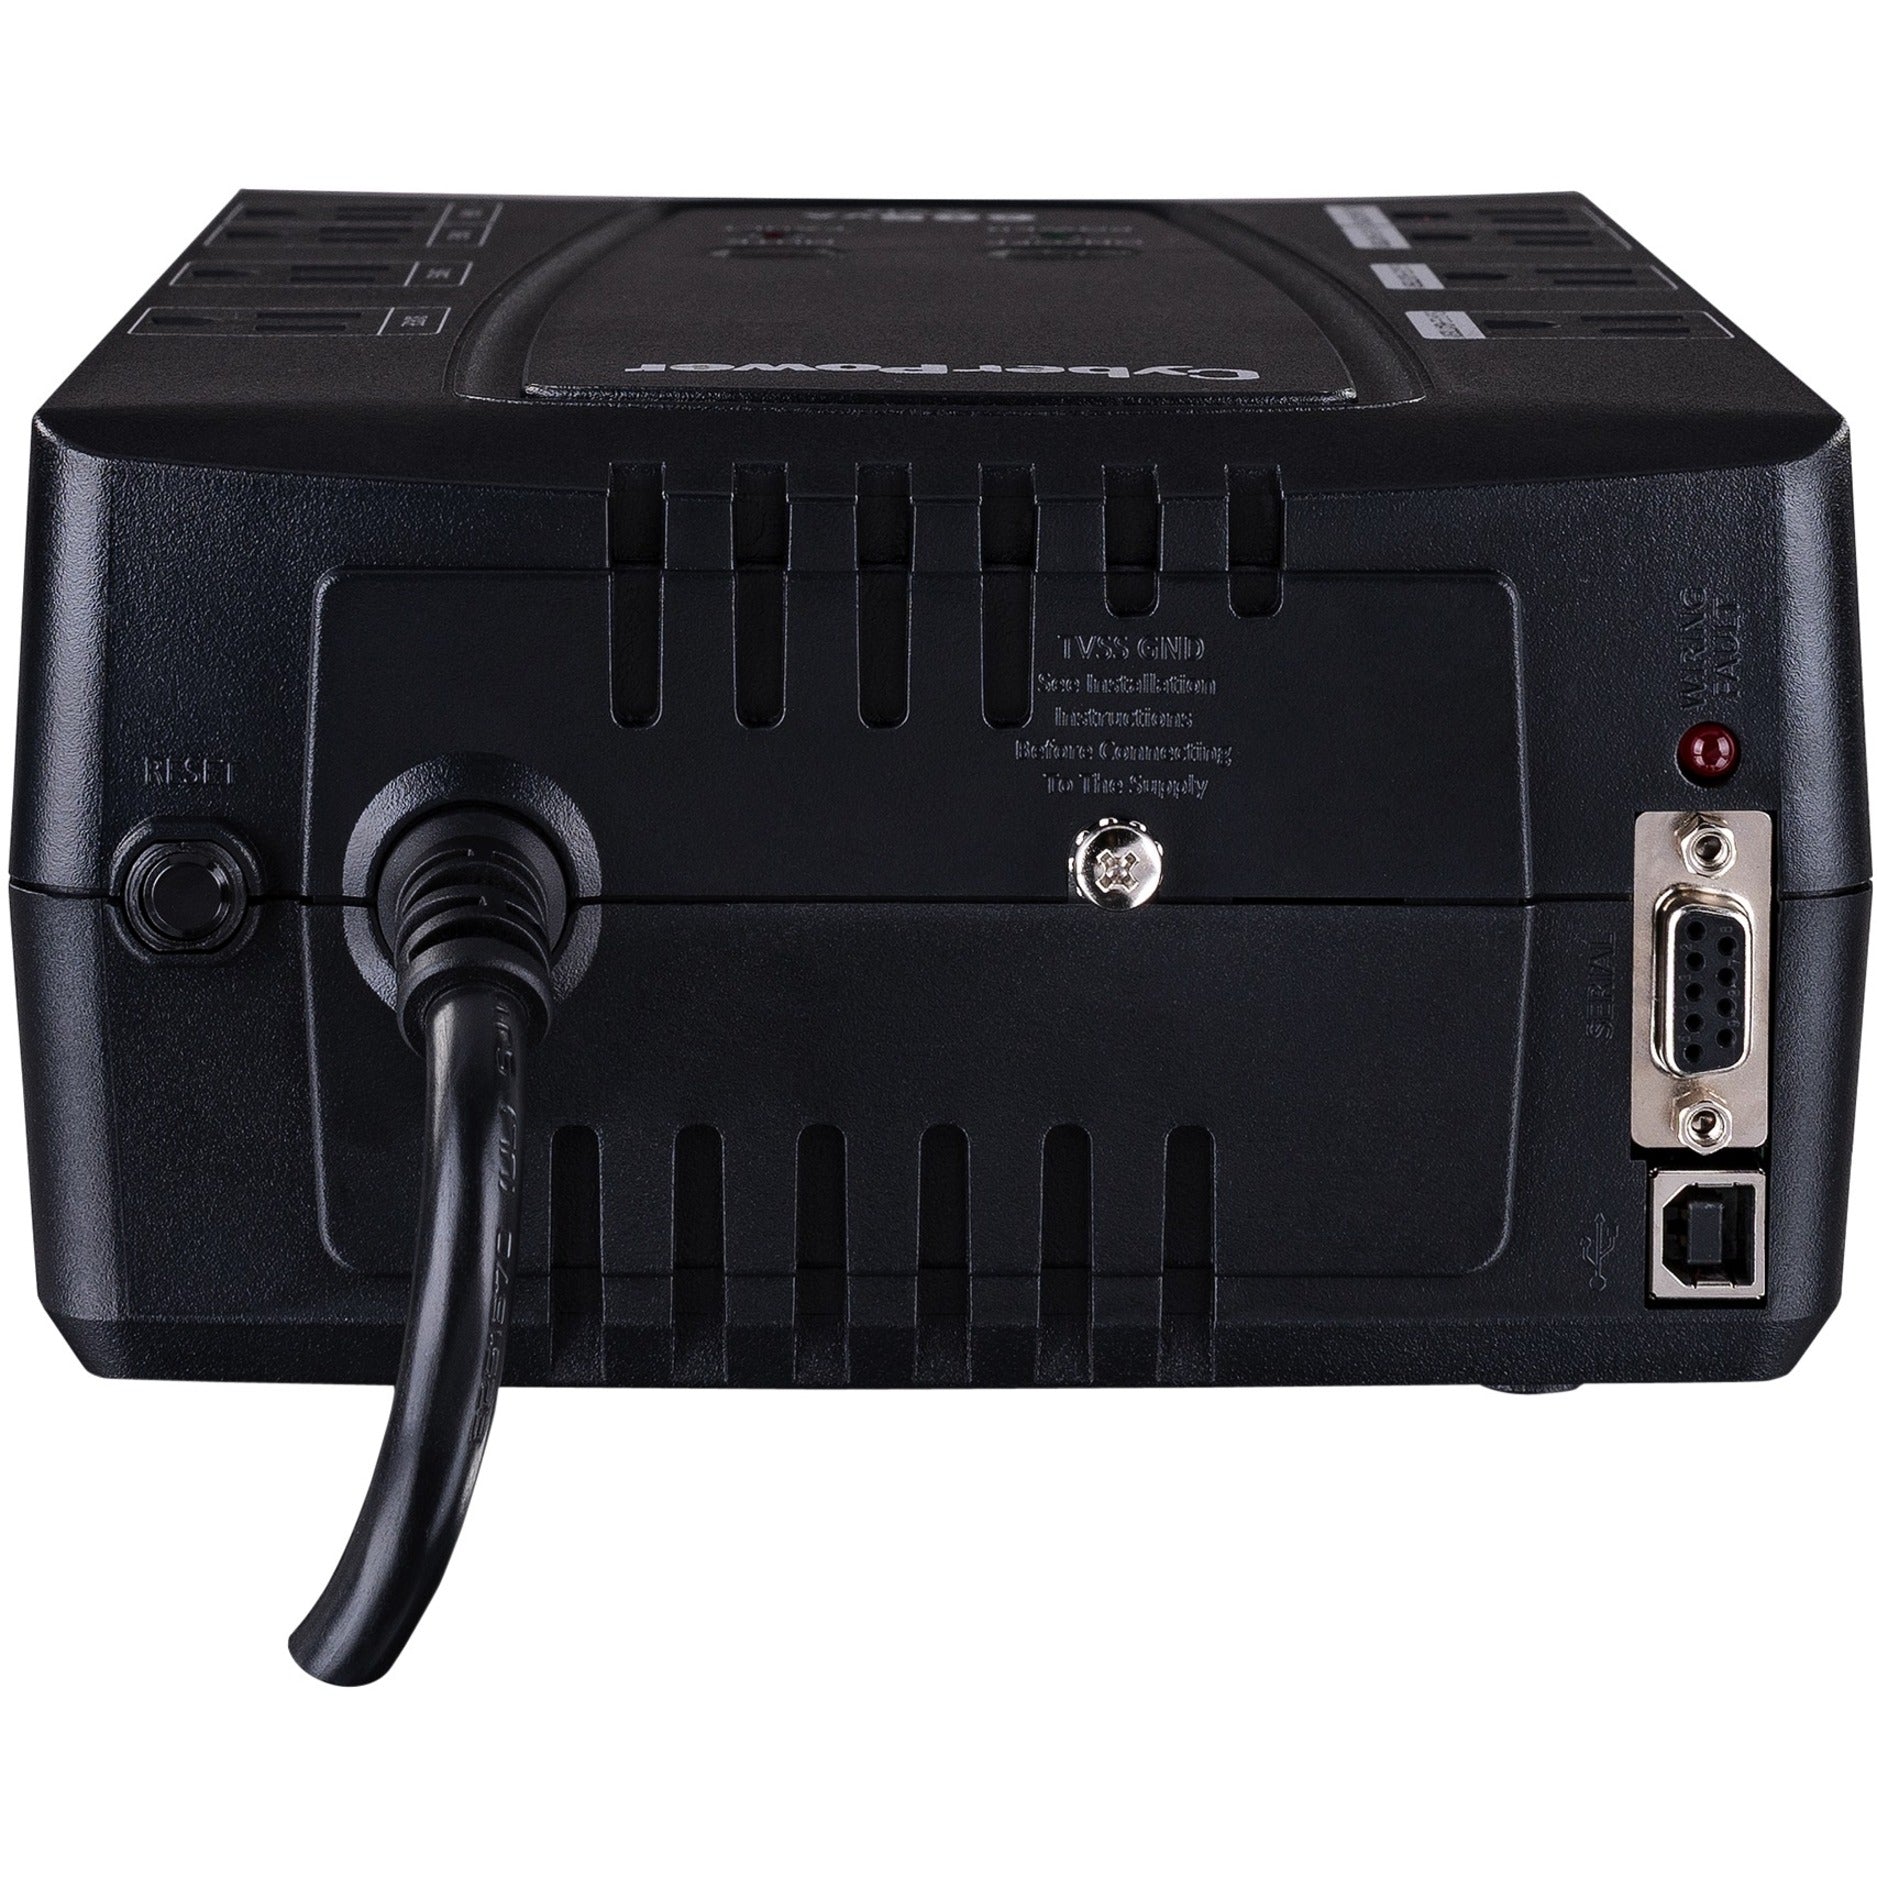 CyberPower CP685AVRG AVR UPS Series, 685 VA Battery Backup